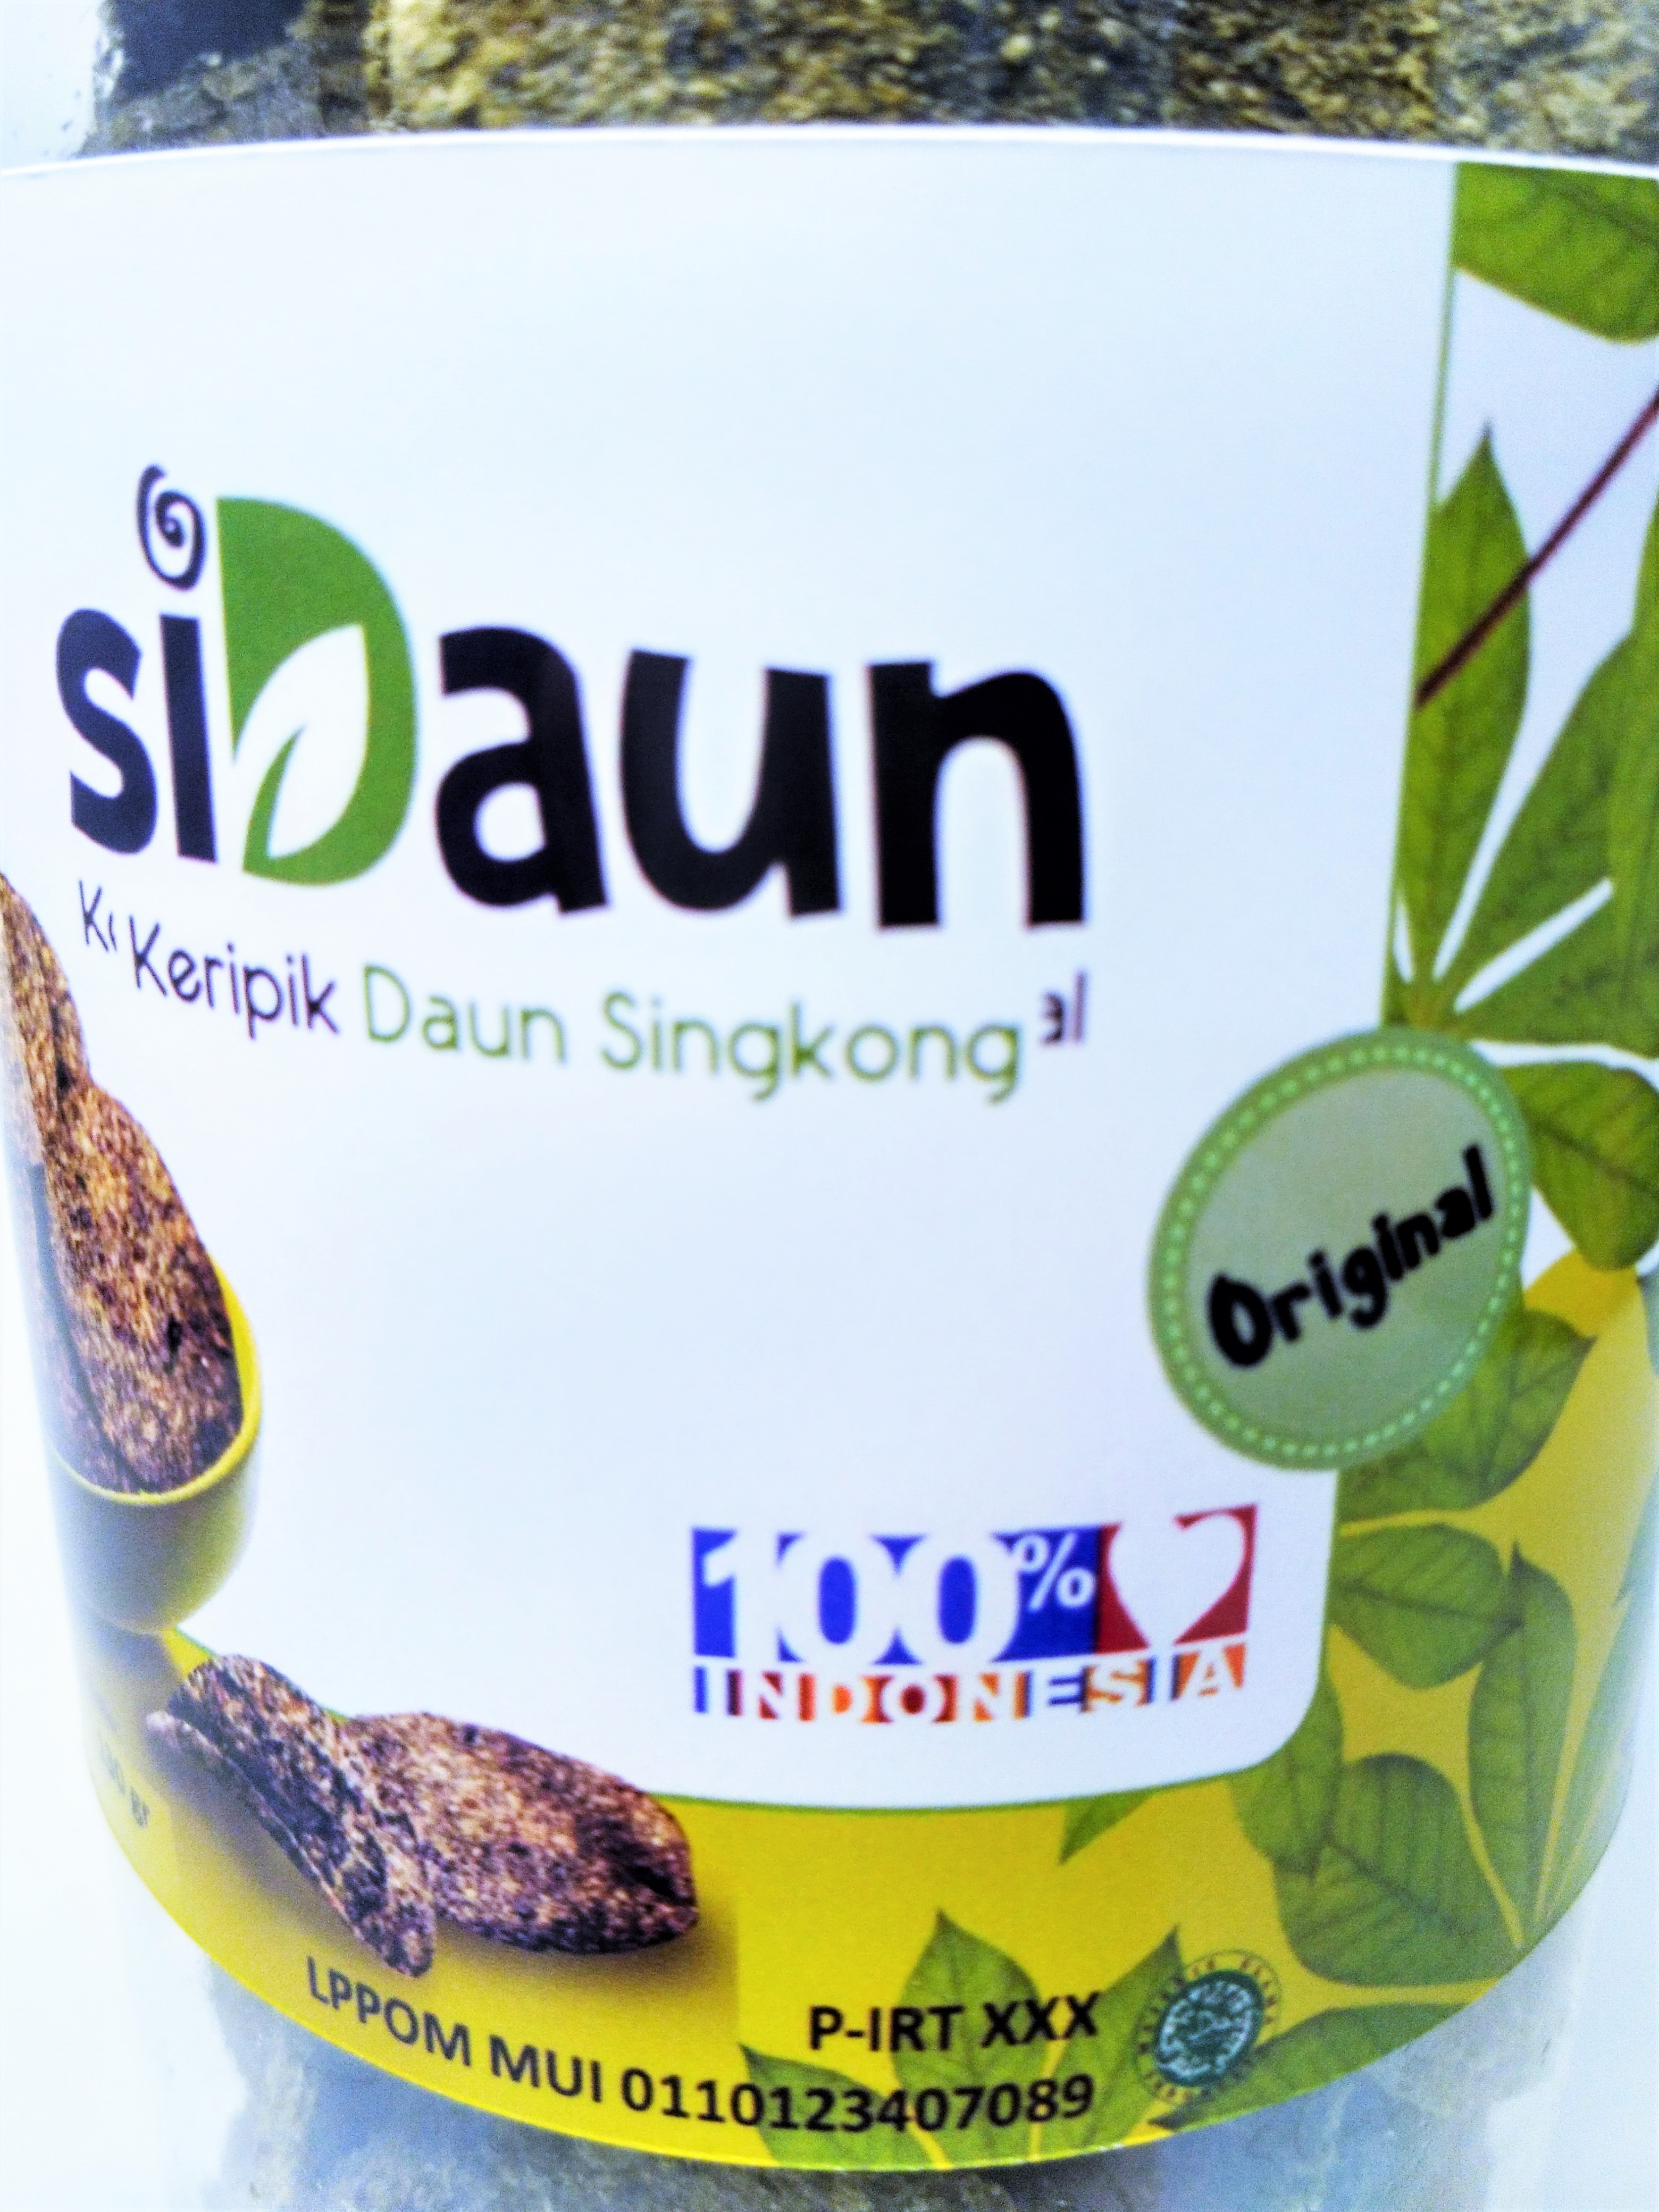 SiDaun Original / Original Cassava Leaf Chips